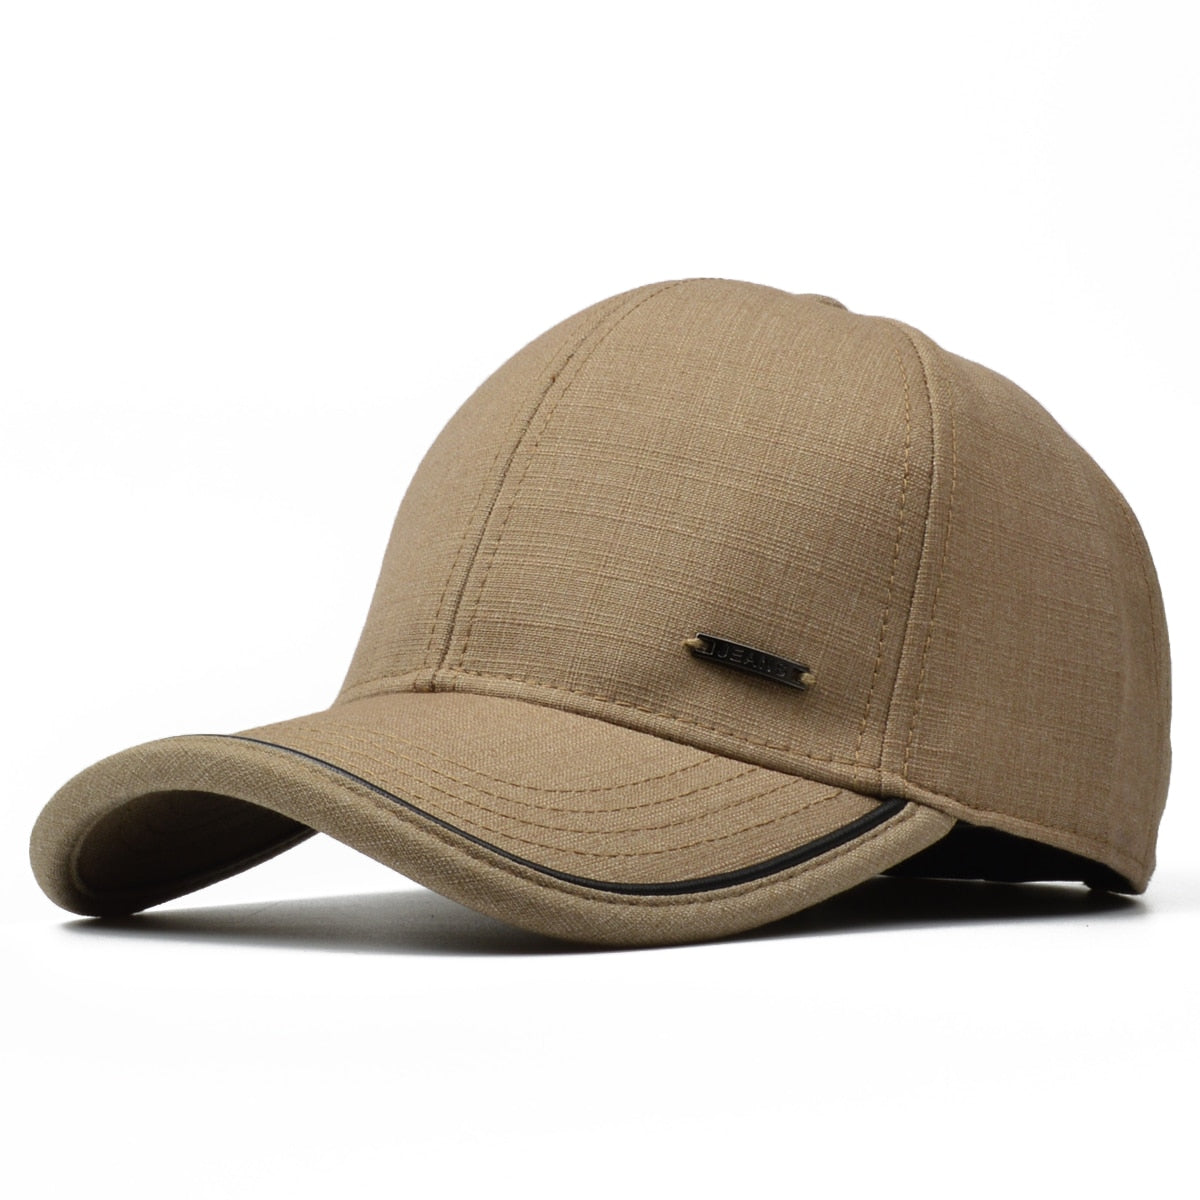 Brand Men's Caps Solid Cotton Baseball Cap Male Golf Snapback Casual Trucker Hats Adjustable Gorras Hombre for Outdoor